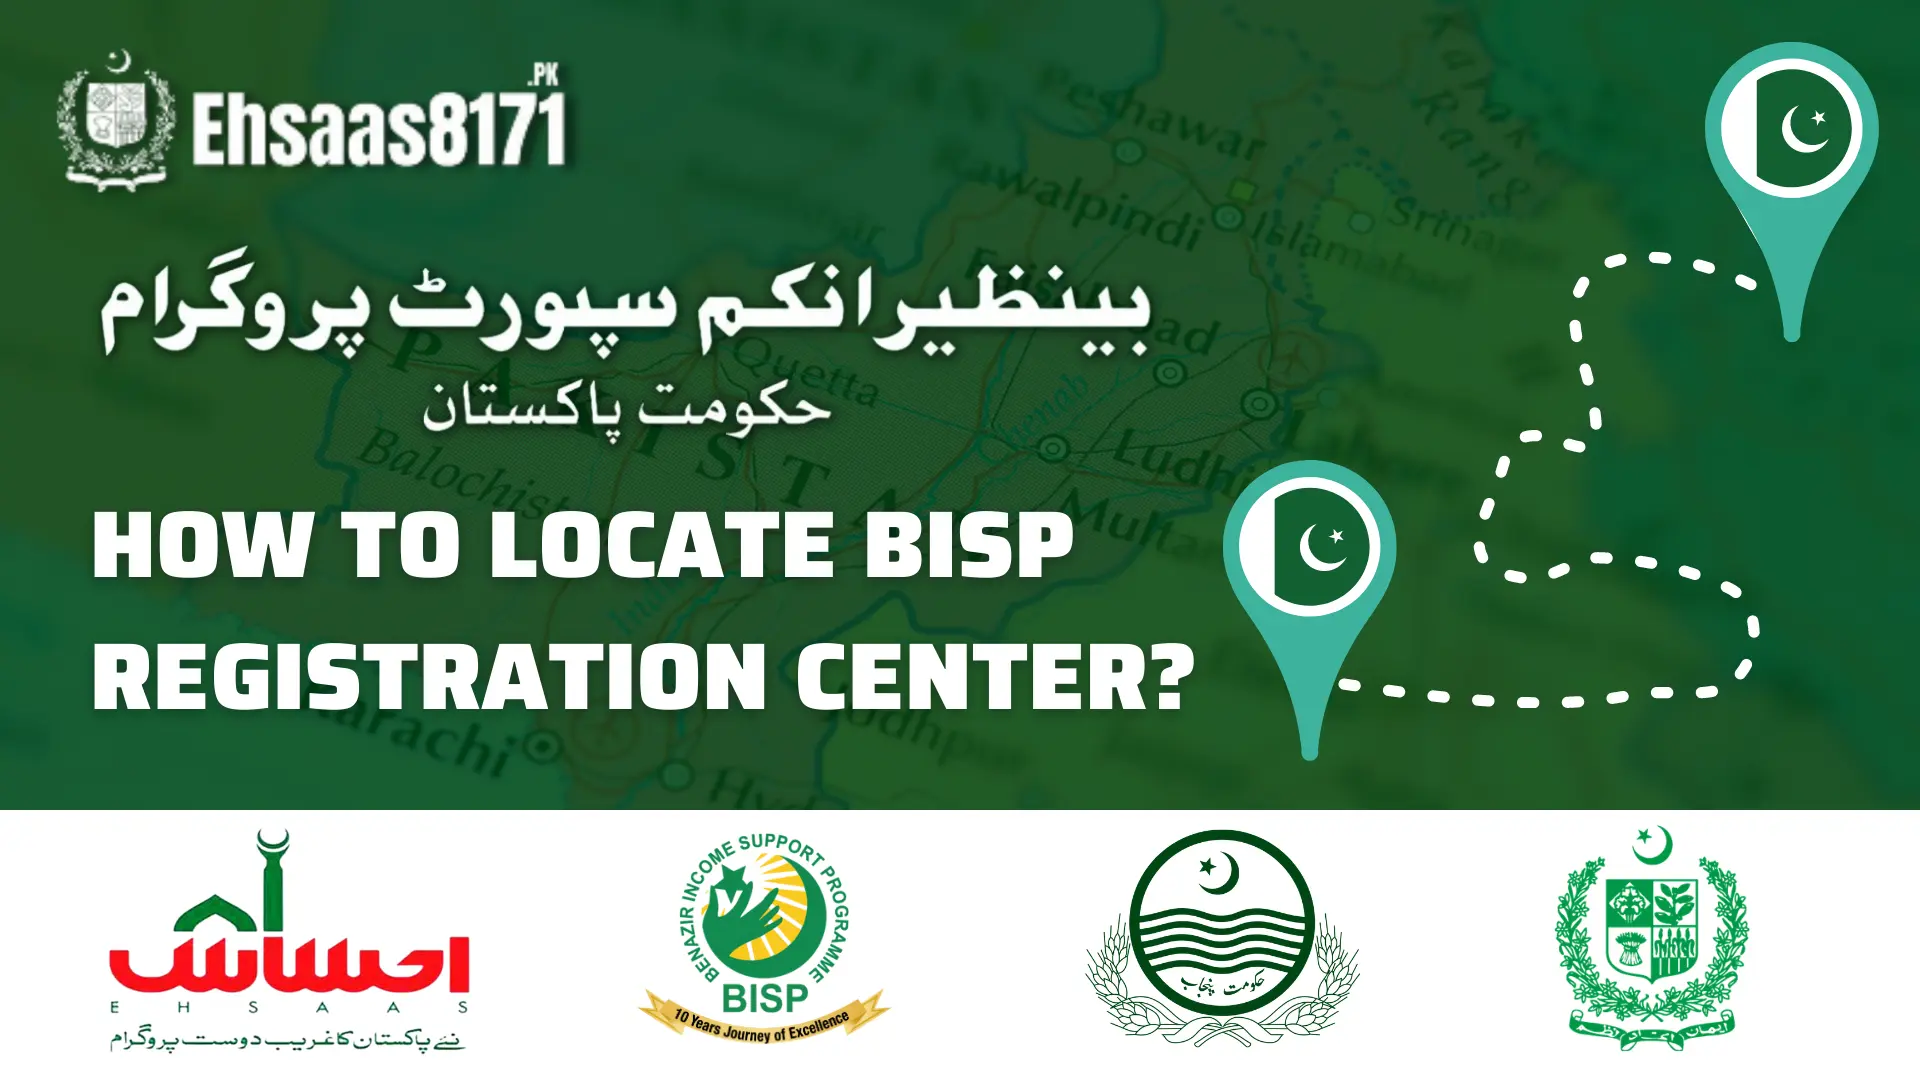 How To Locate BISP Registration Center?